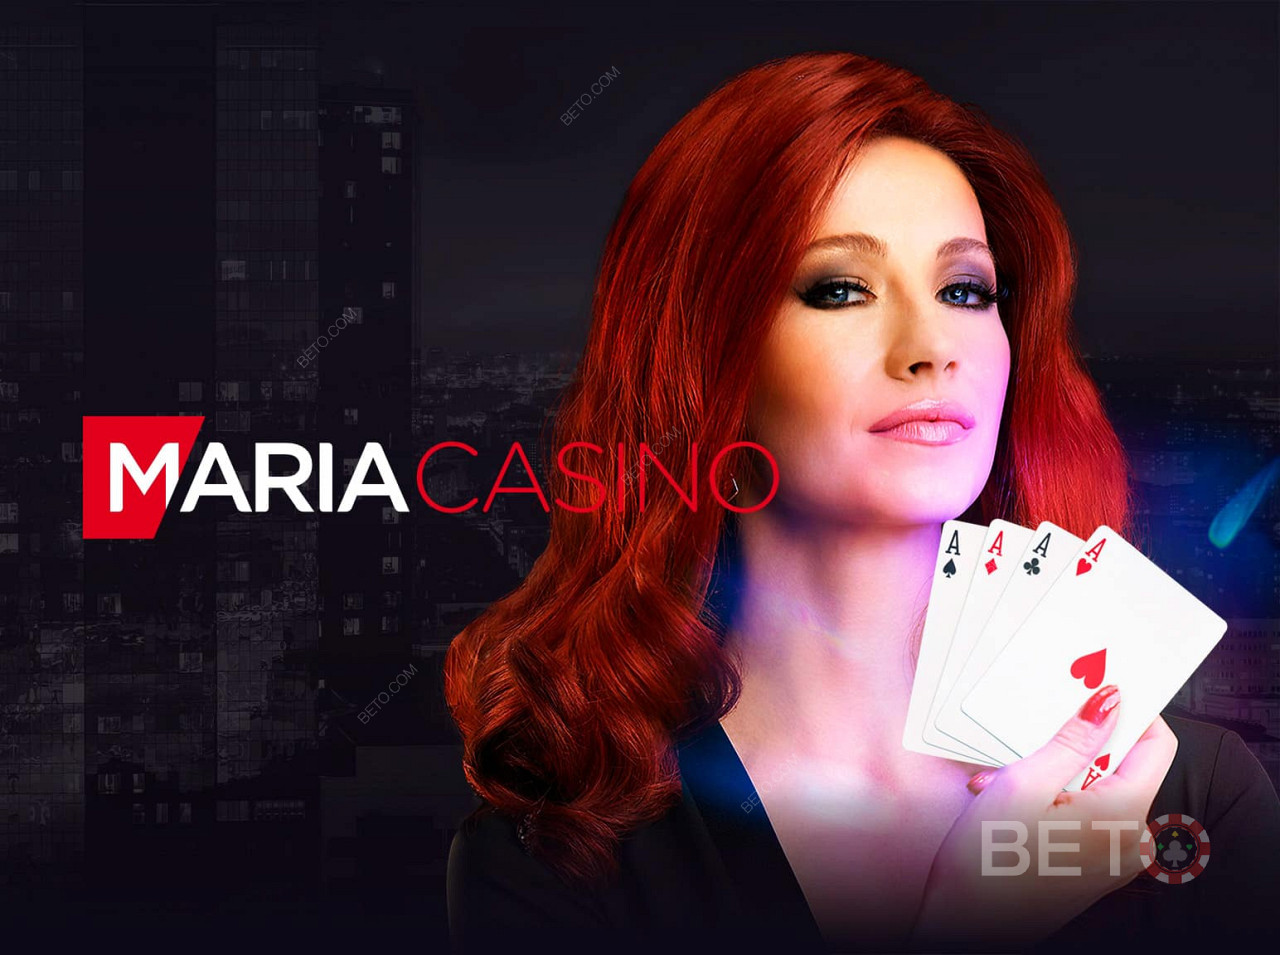 VIP program and bonus for you as a customer at Maria casino